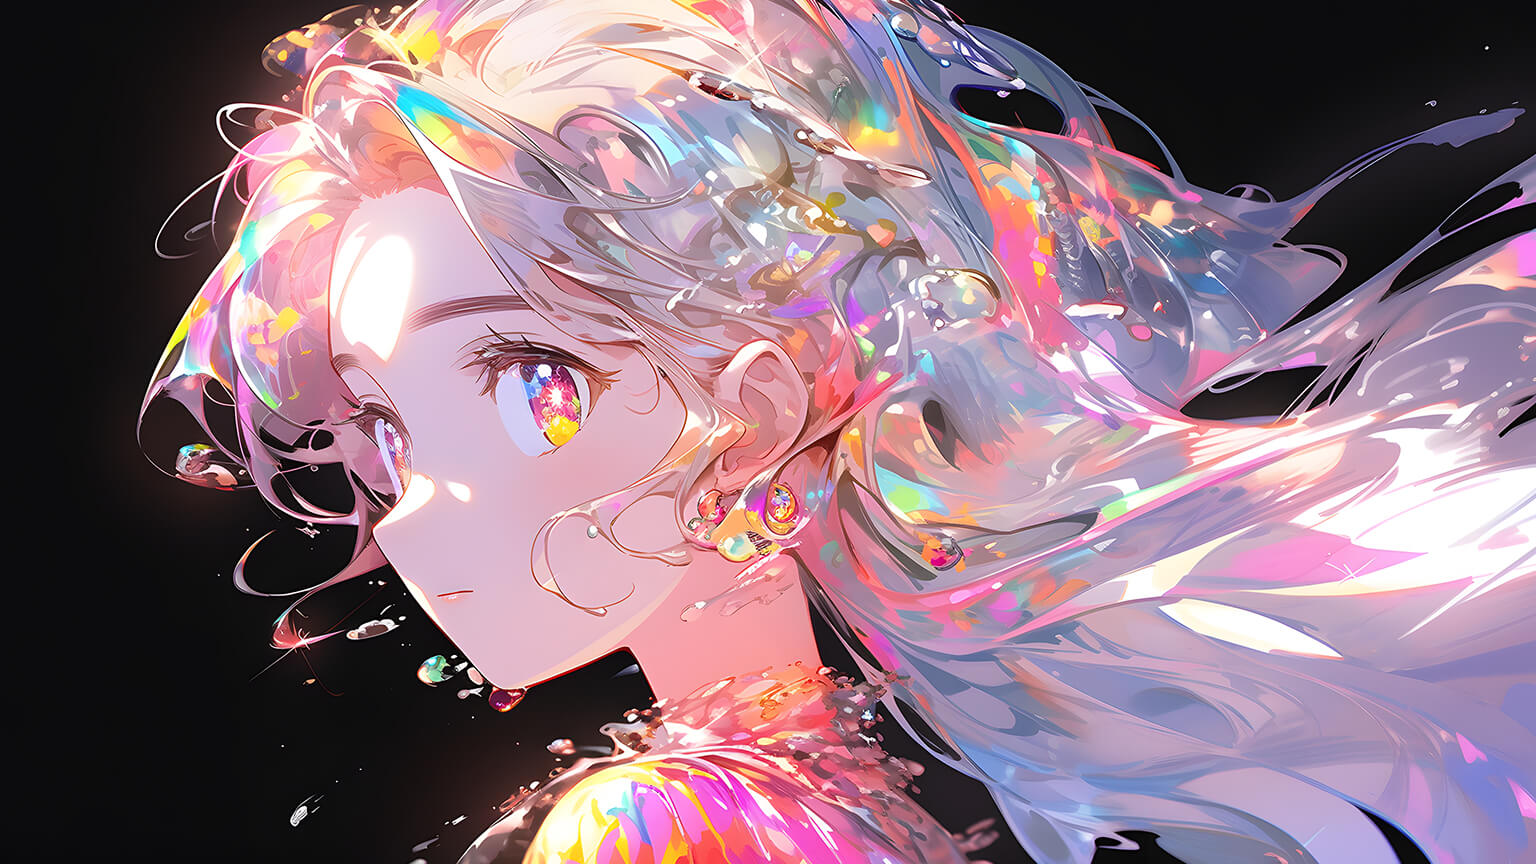 Anime-Style Teenager Girl Illustration in Magical Cityscape | AI Art  Generator | Easy-Peasy.AI